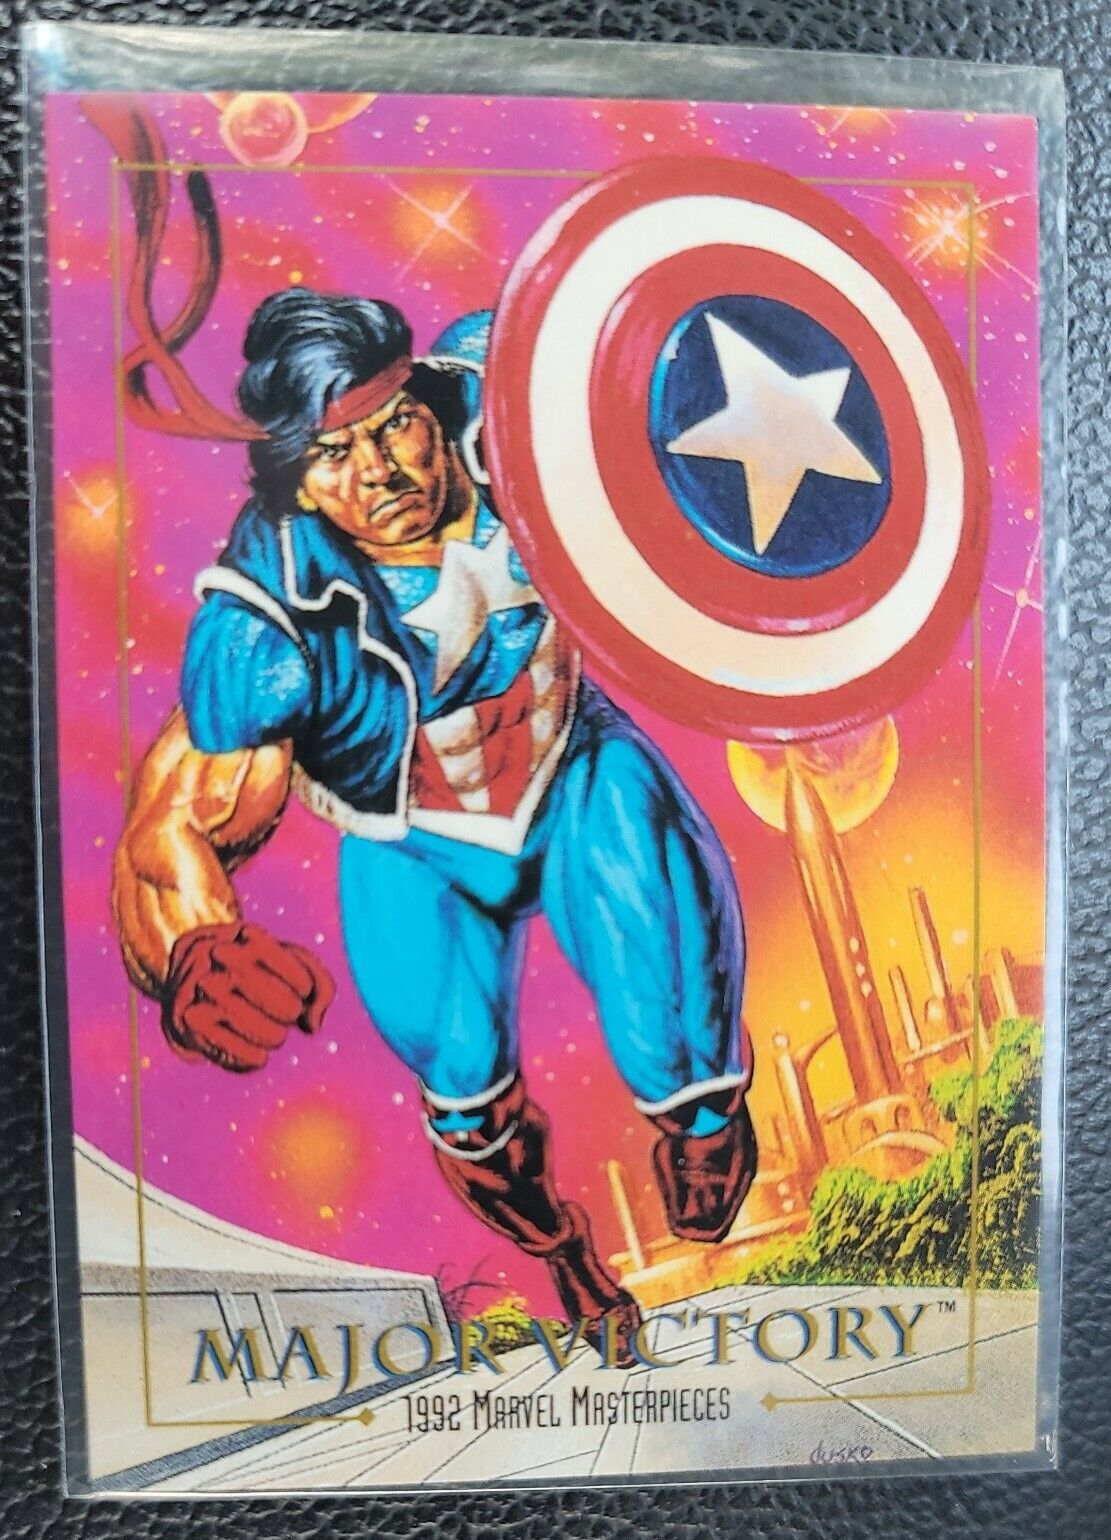 MAJOR VICTORY 1992 Skybox Marvel Masterpieces card #48 CAP Joe Jusko art